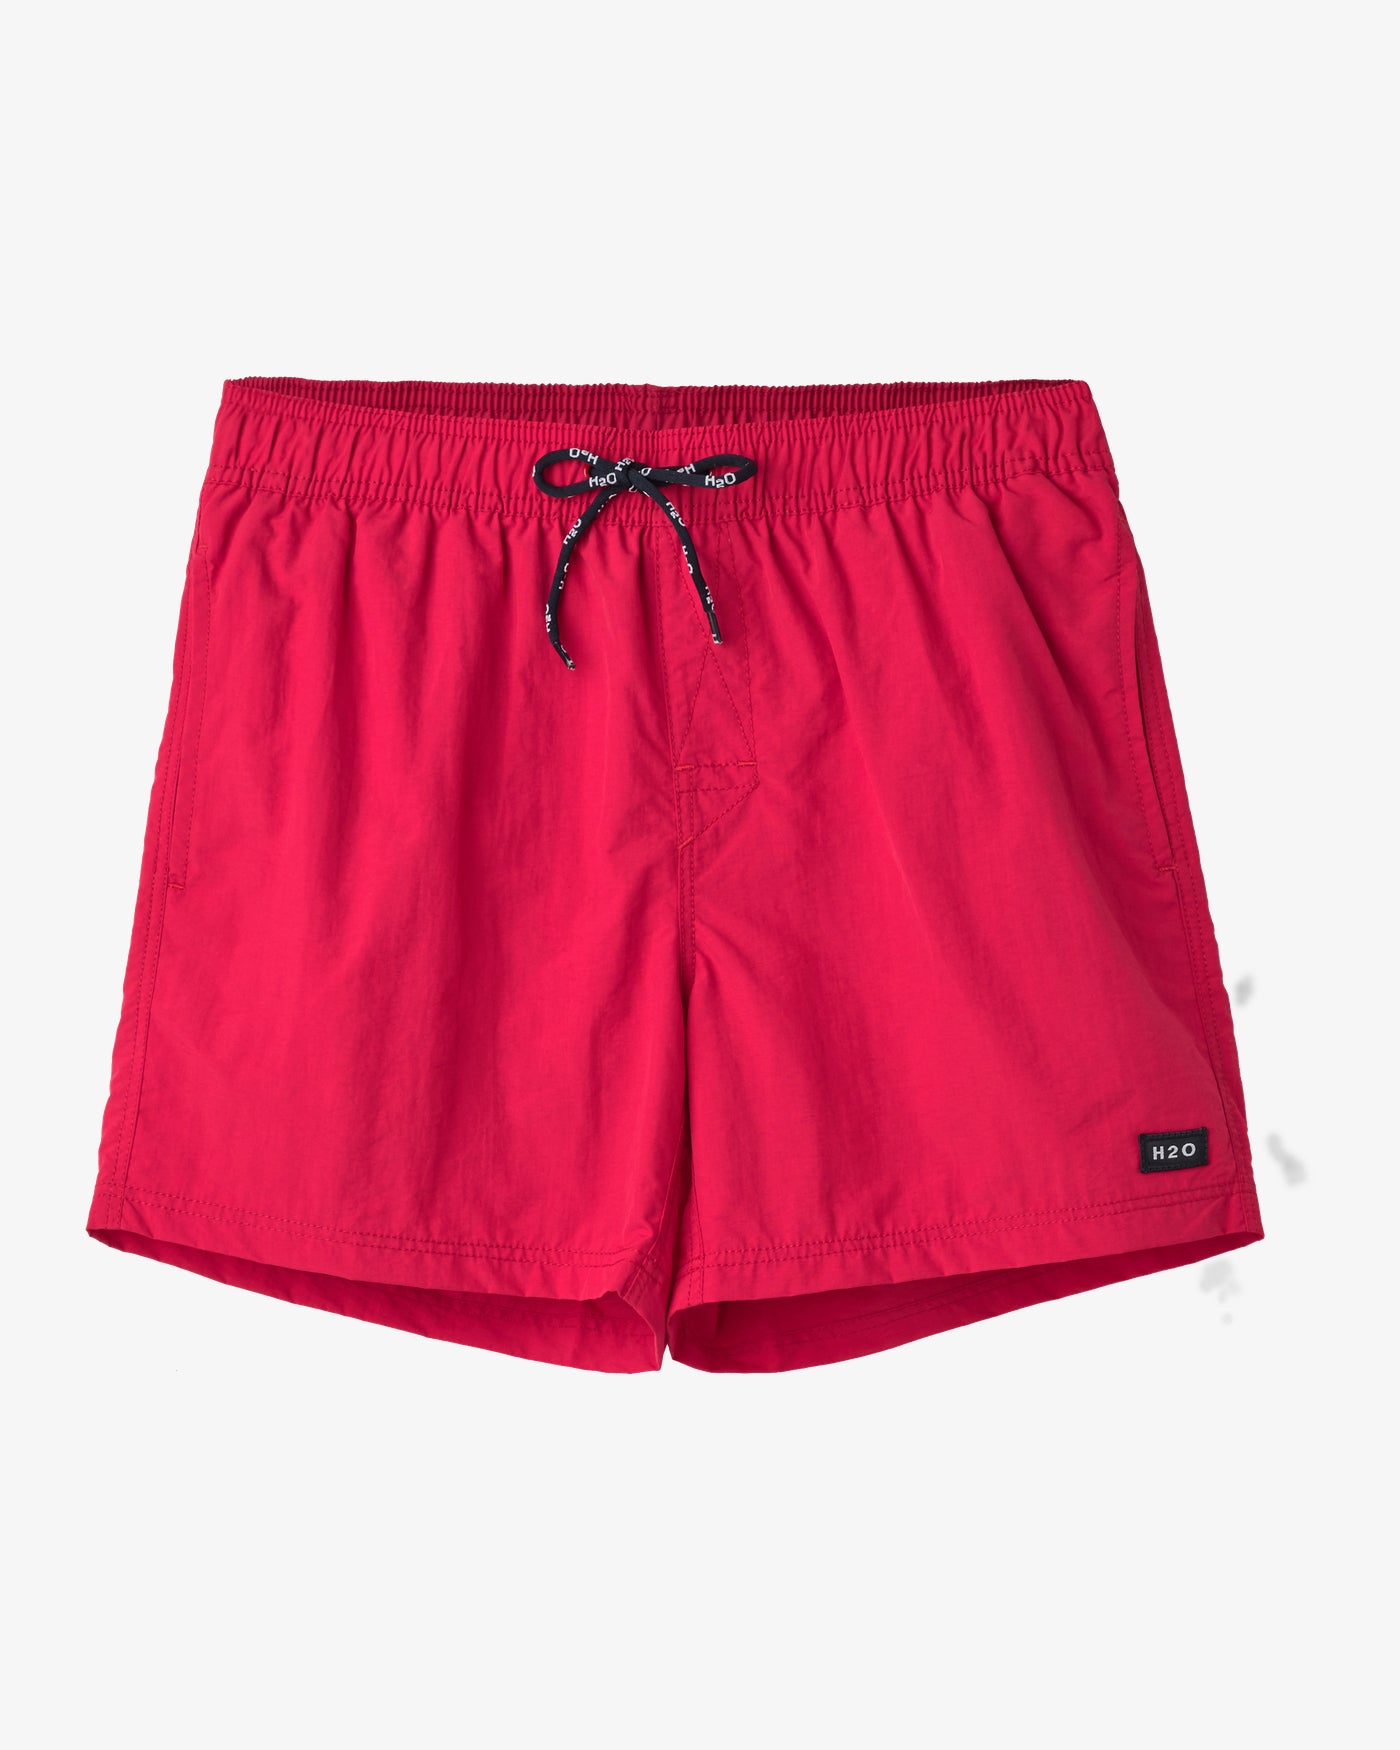 H2O Basic Leisure Badeshorts Shorts 2000 Red